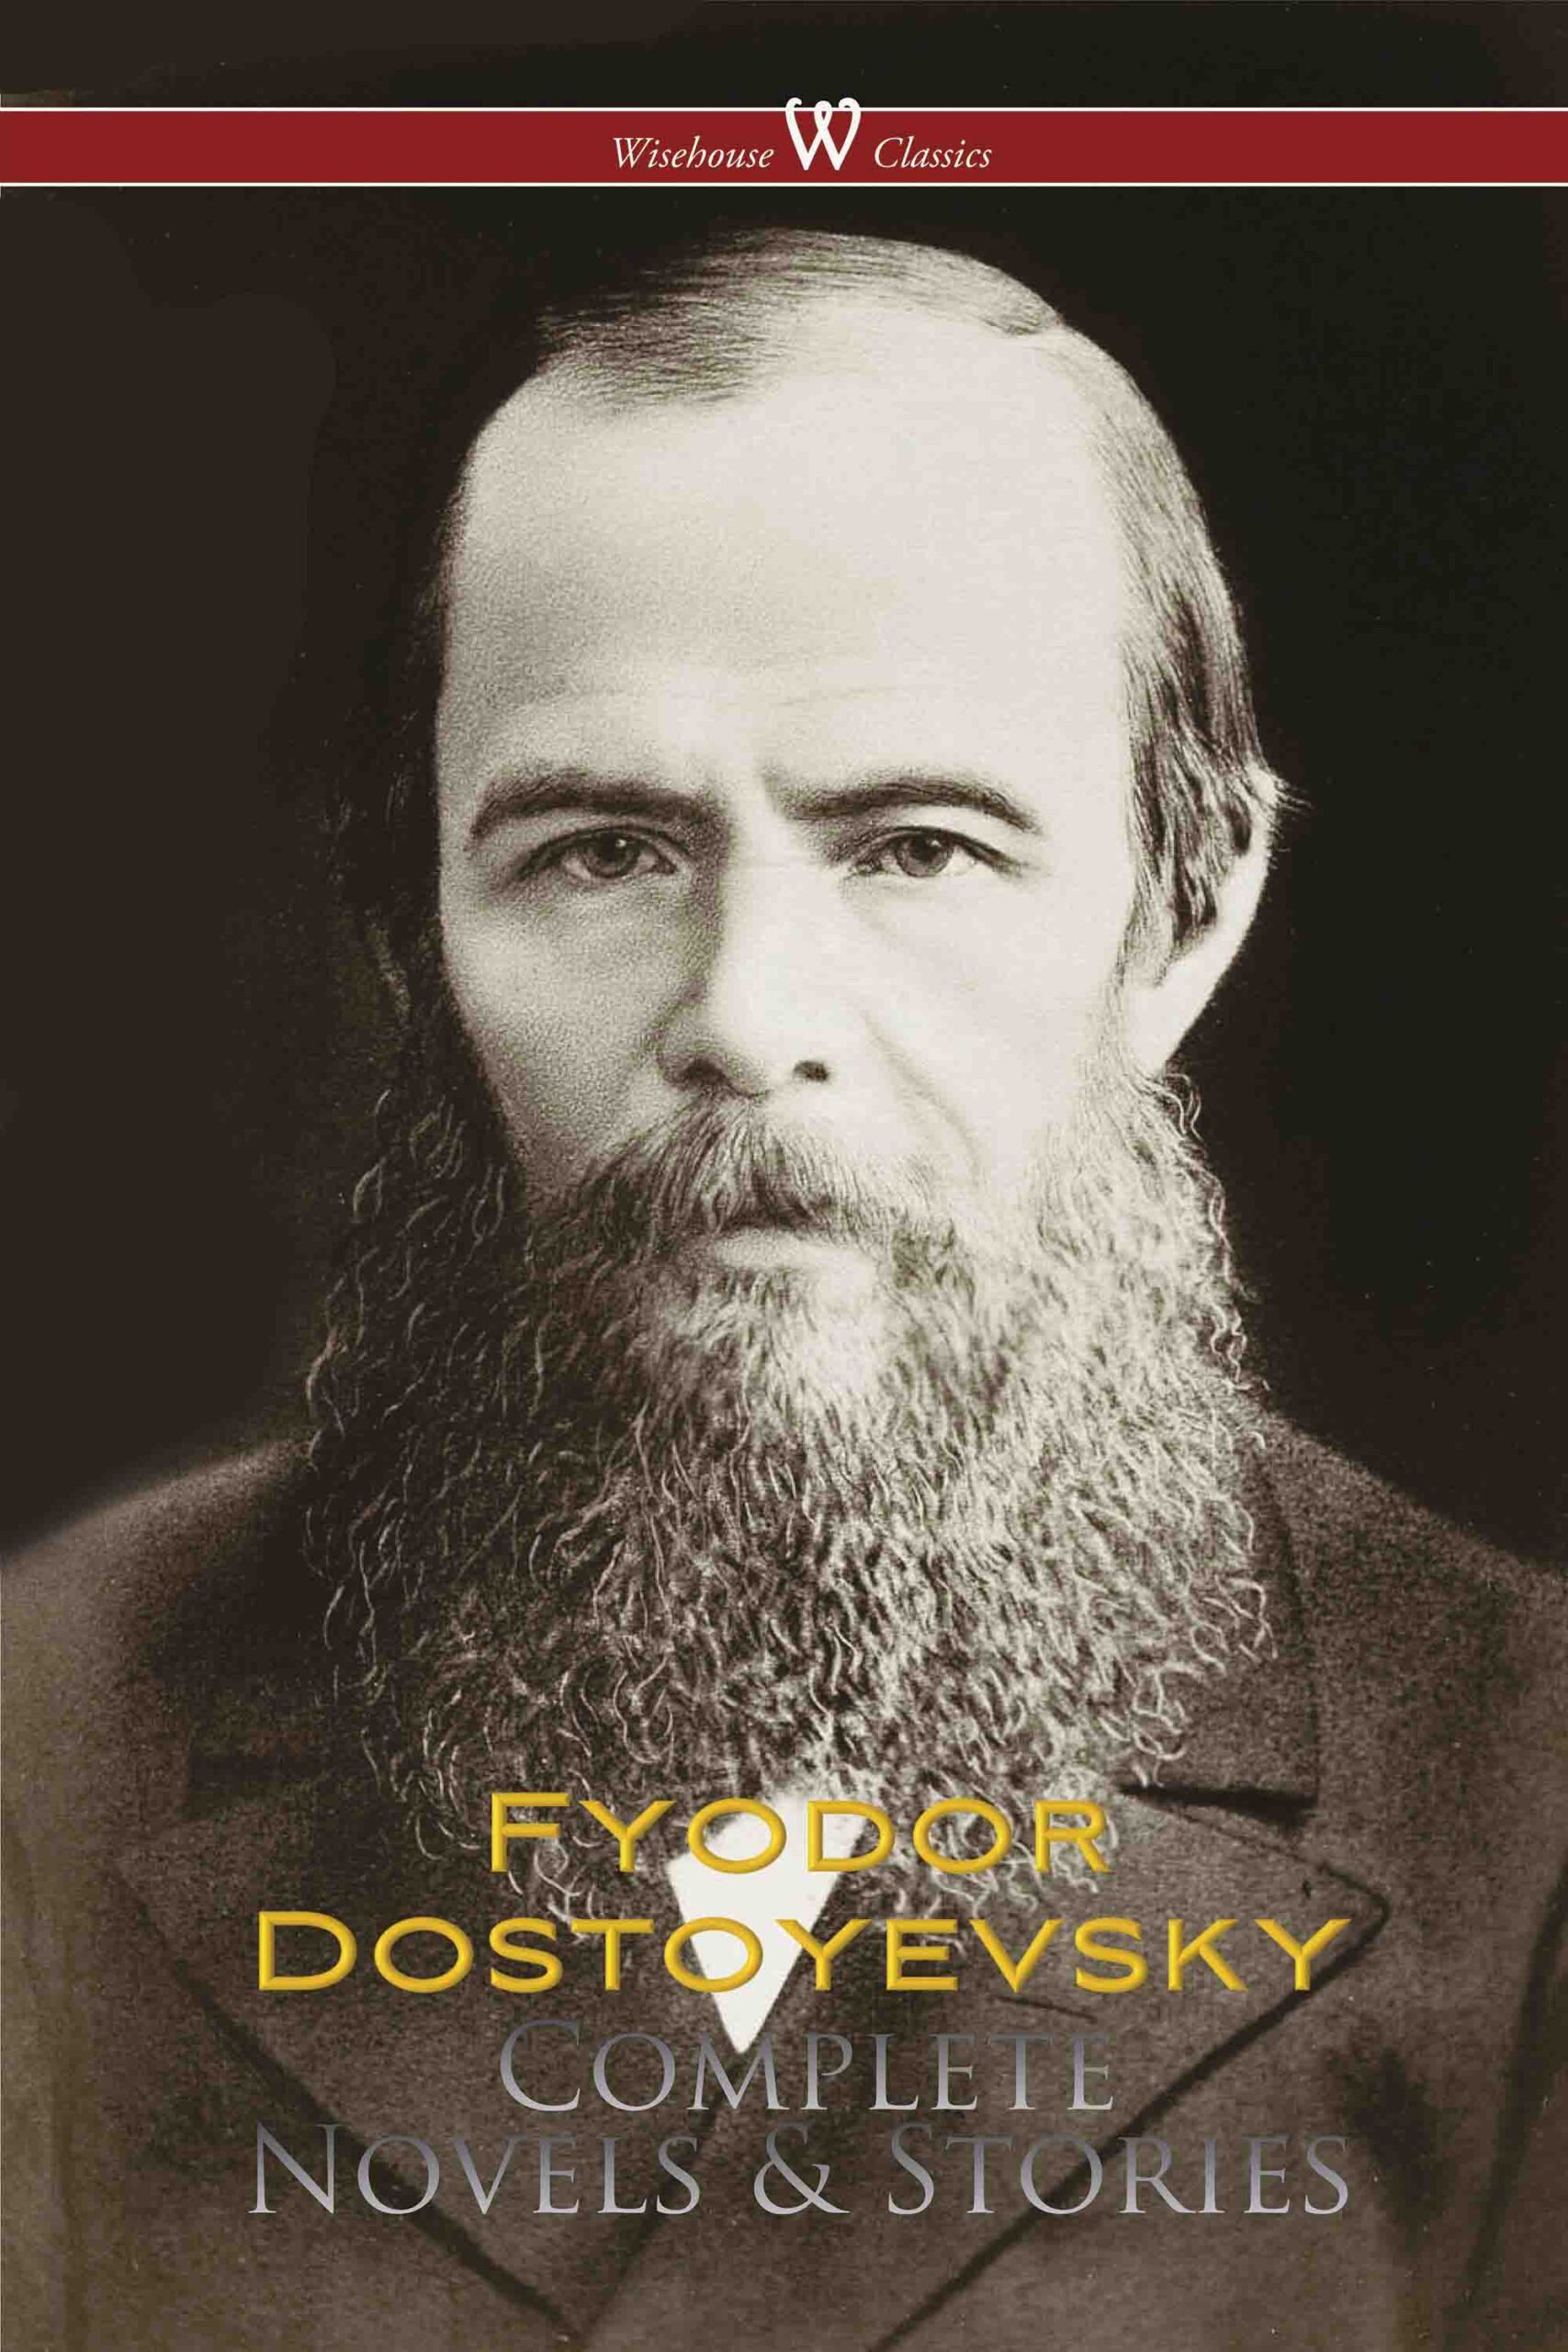 Fyodor Dostoyevsky: Complete Works (Wisehouse Classics)